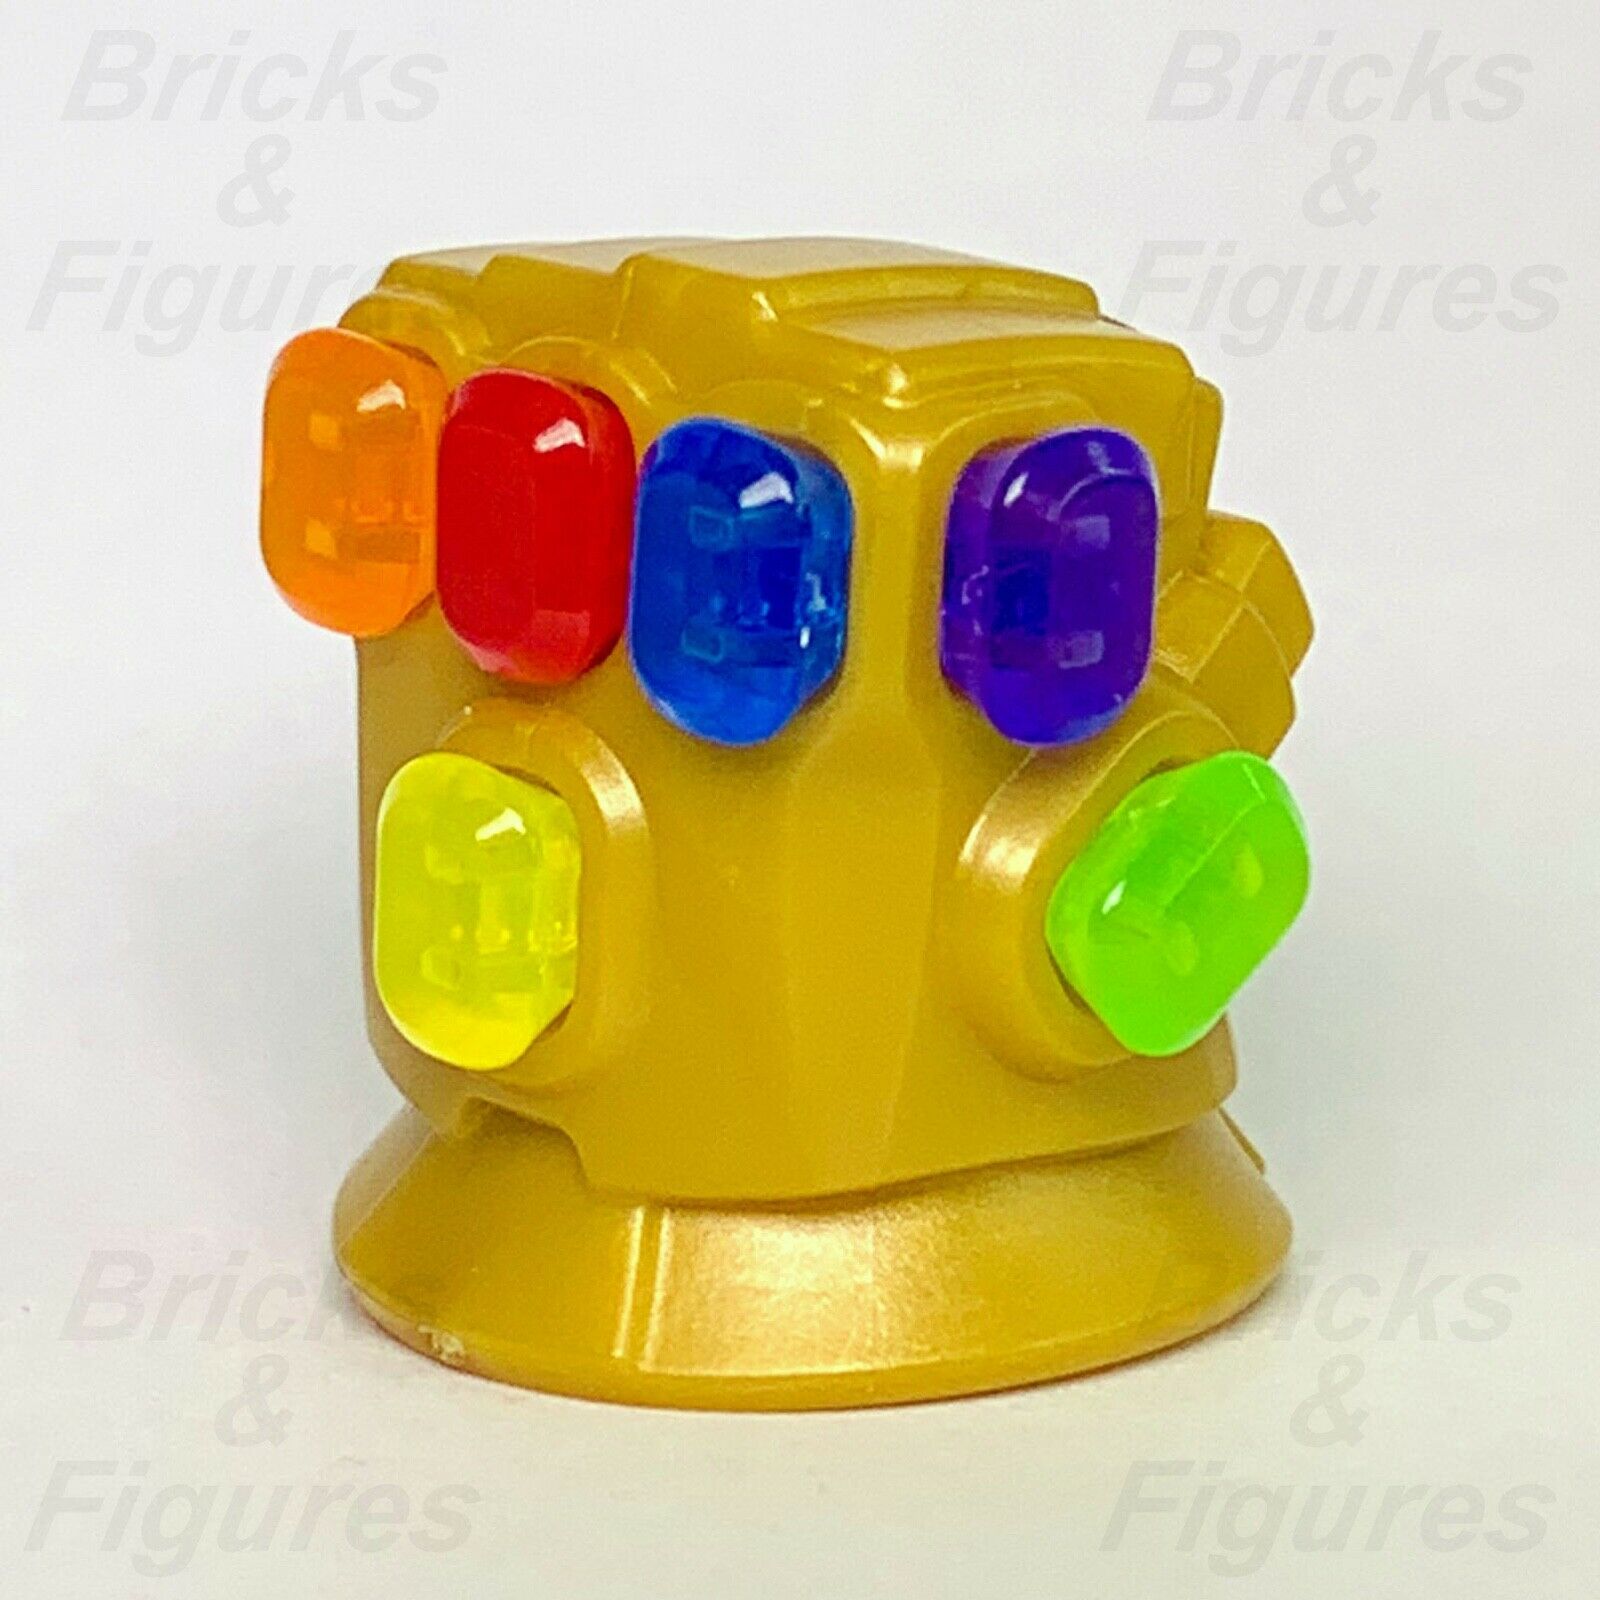 Marvel Super Heroes Avengers LEGO Infinity Gauntlet with All Stones Part 76107 76131 - Bricks & Figures